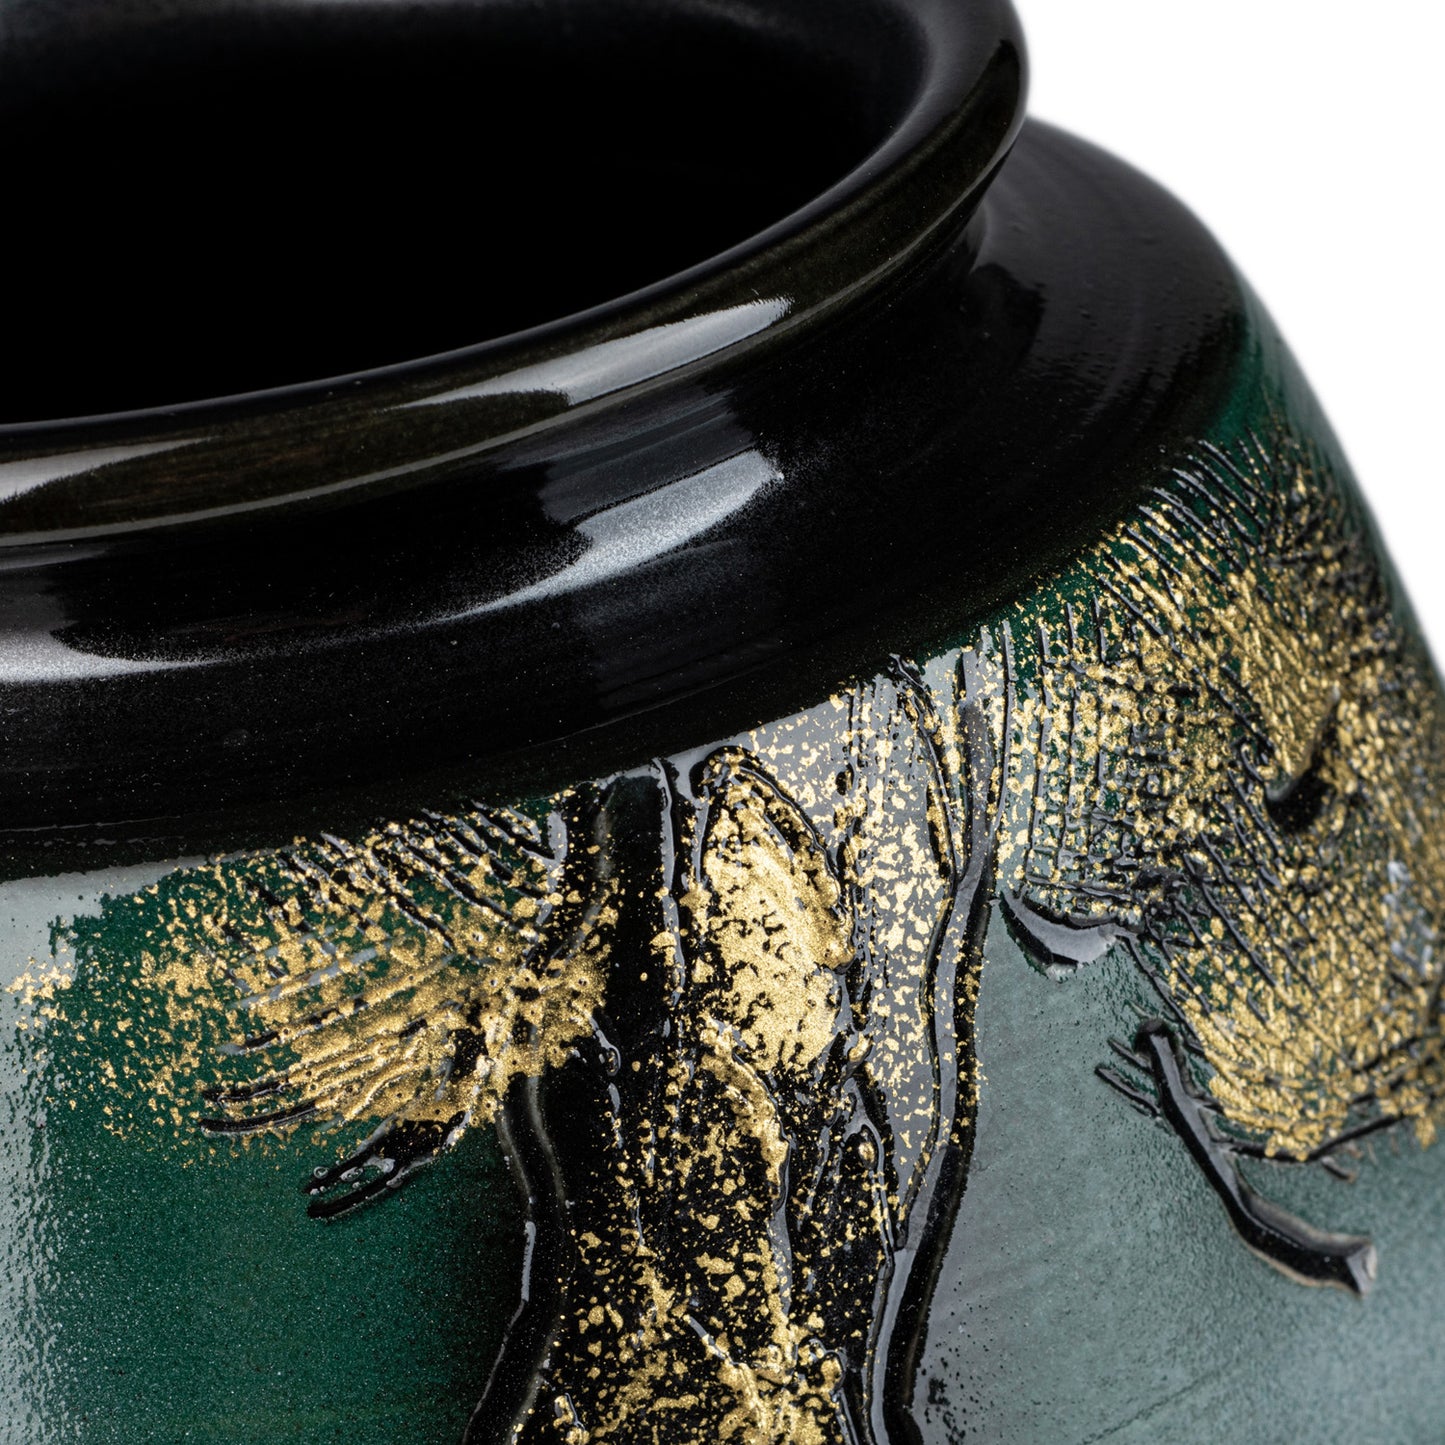 Green and Gold Kinsai Pine Japanese Vase